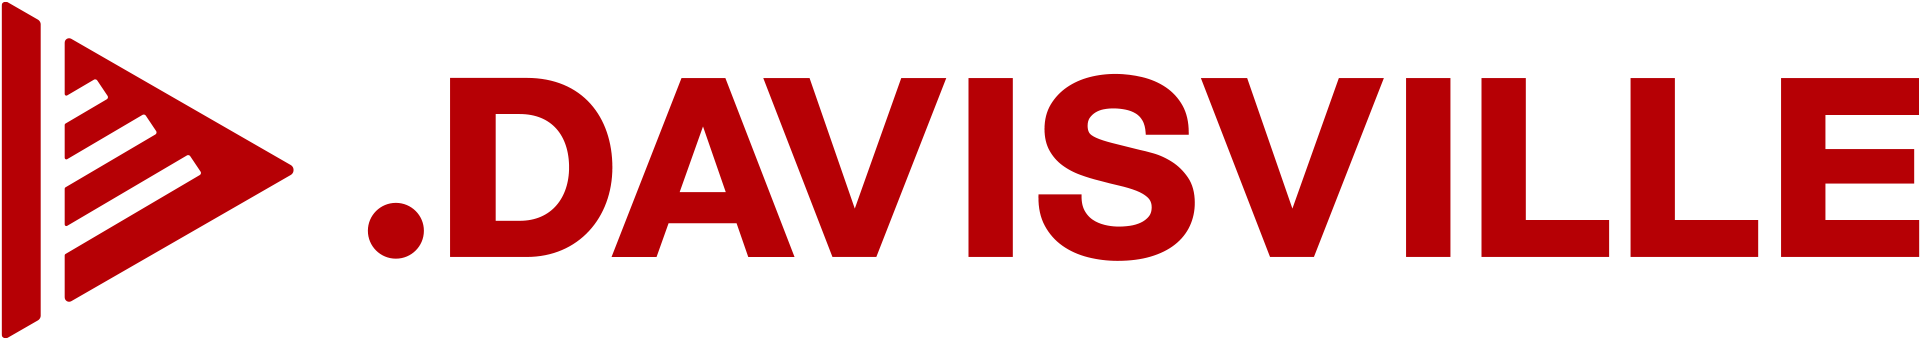 DAVISVILLE アウトドア向け高機能キャップ販売・帽子ブランド【デイビスビル】公式通販